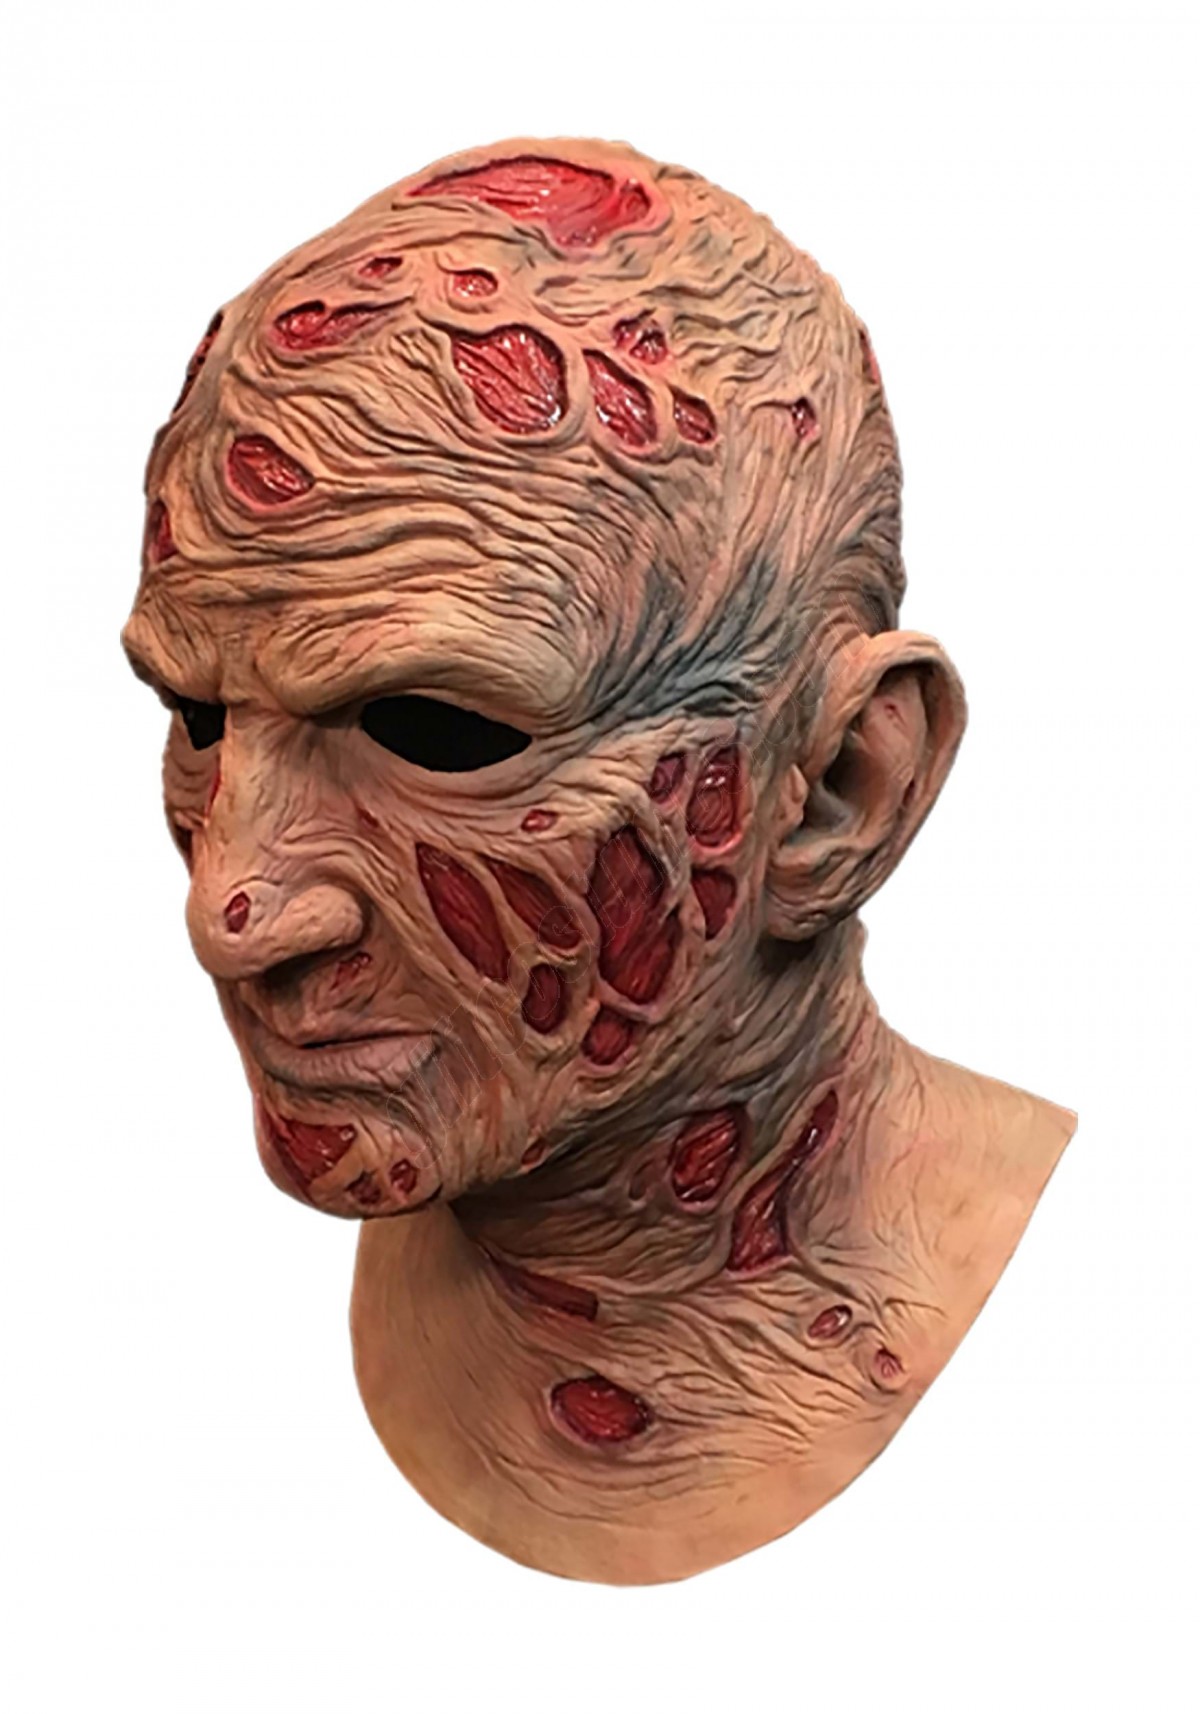 Springwood Slasher Mask from A Nightmare on Elm Street  Promotions - -2